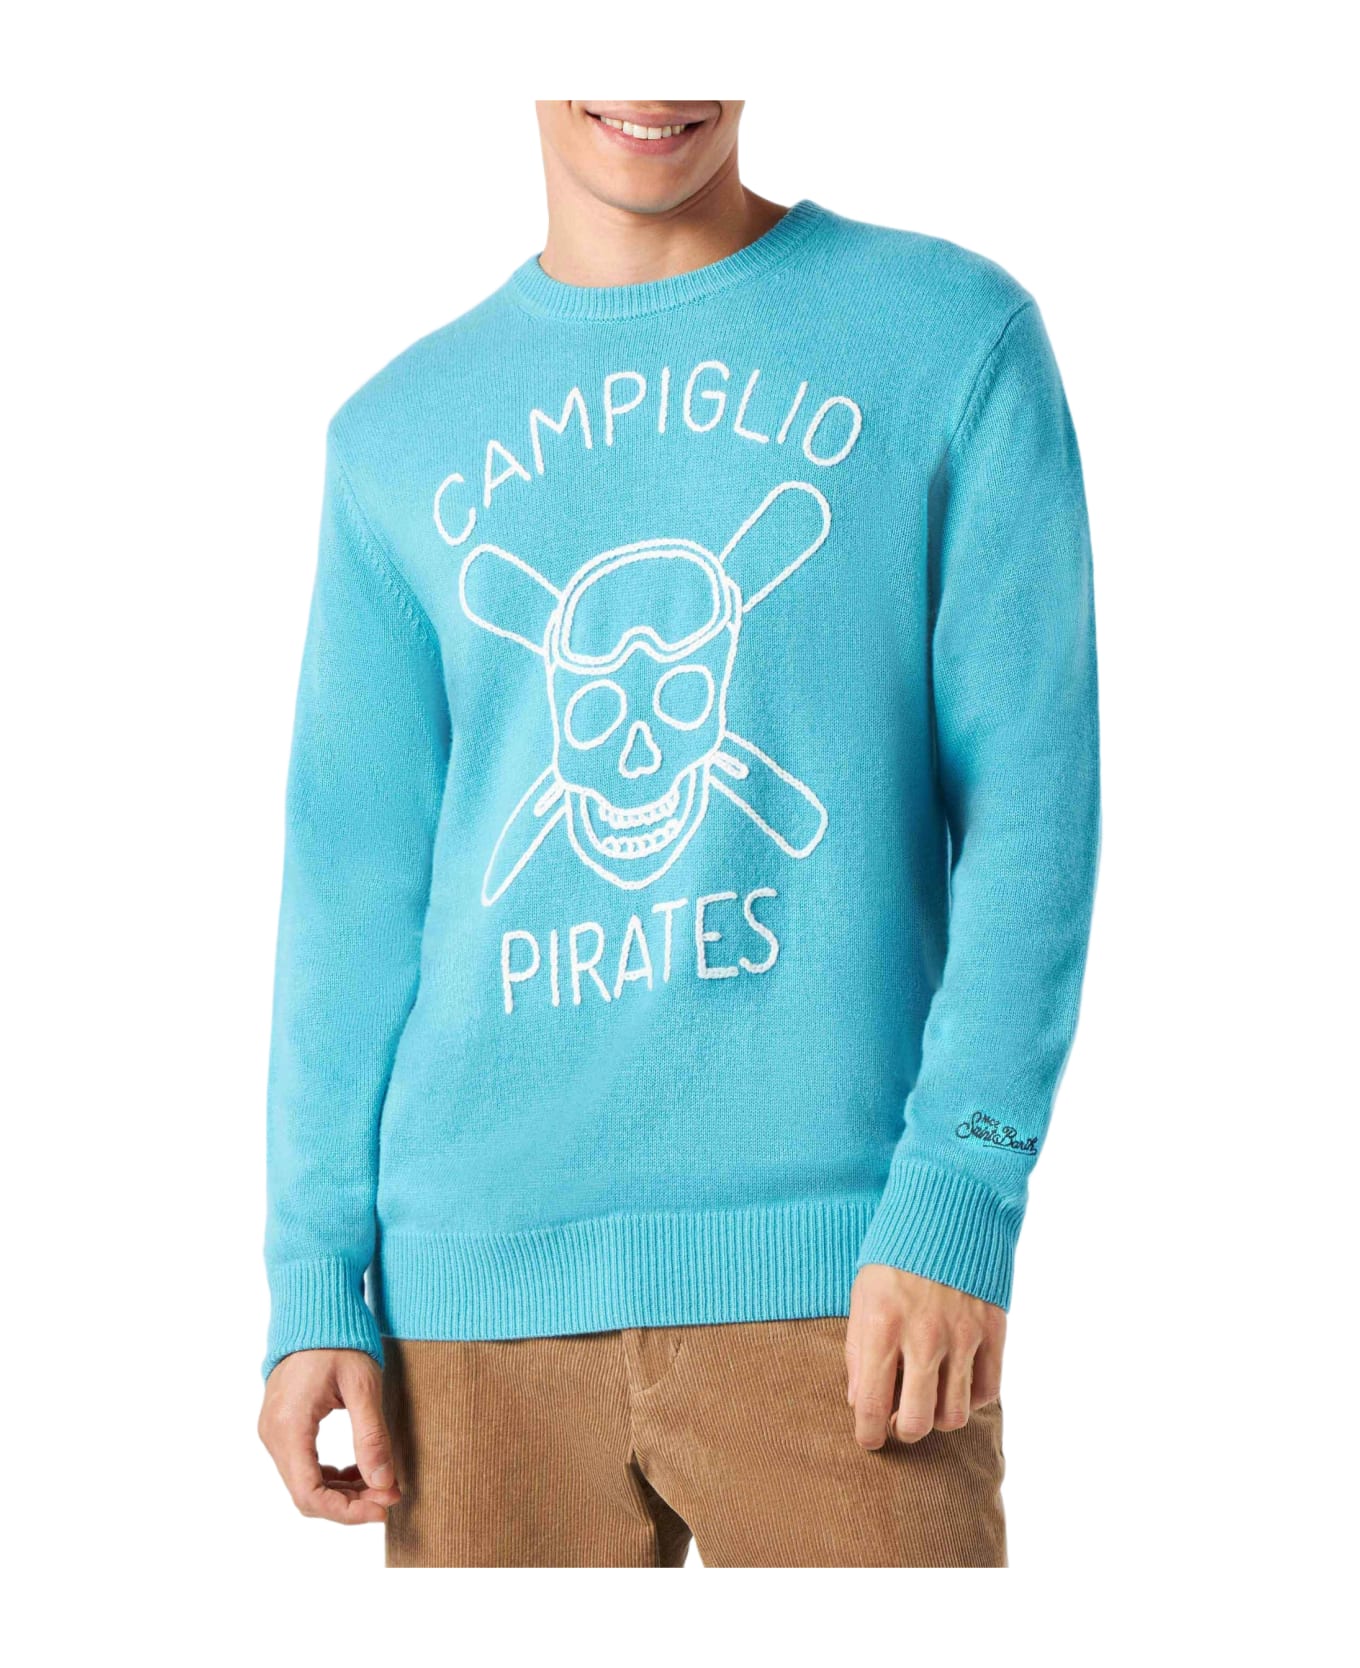 MC2 Saint Barth Man Sweater With Campiglio Pirates Embroidery - BLUE